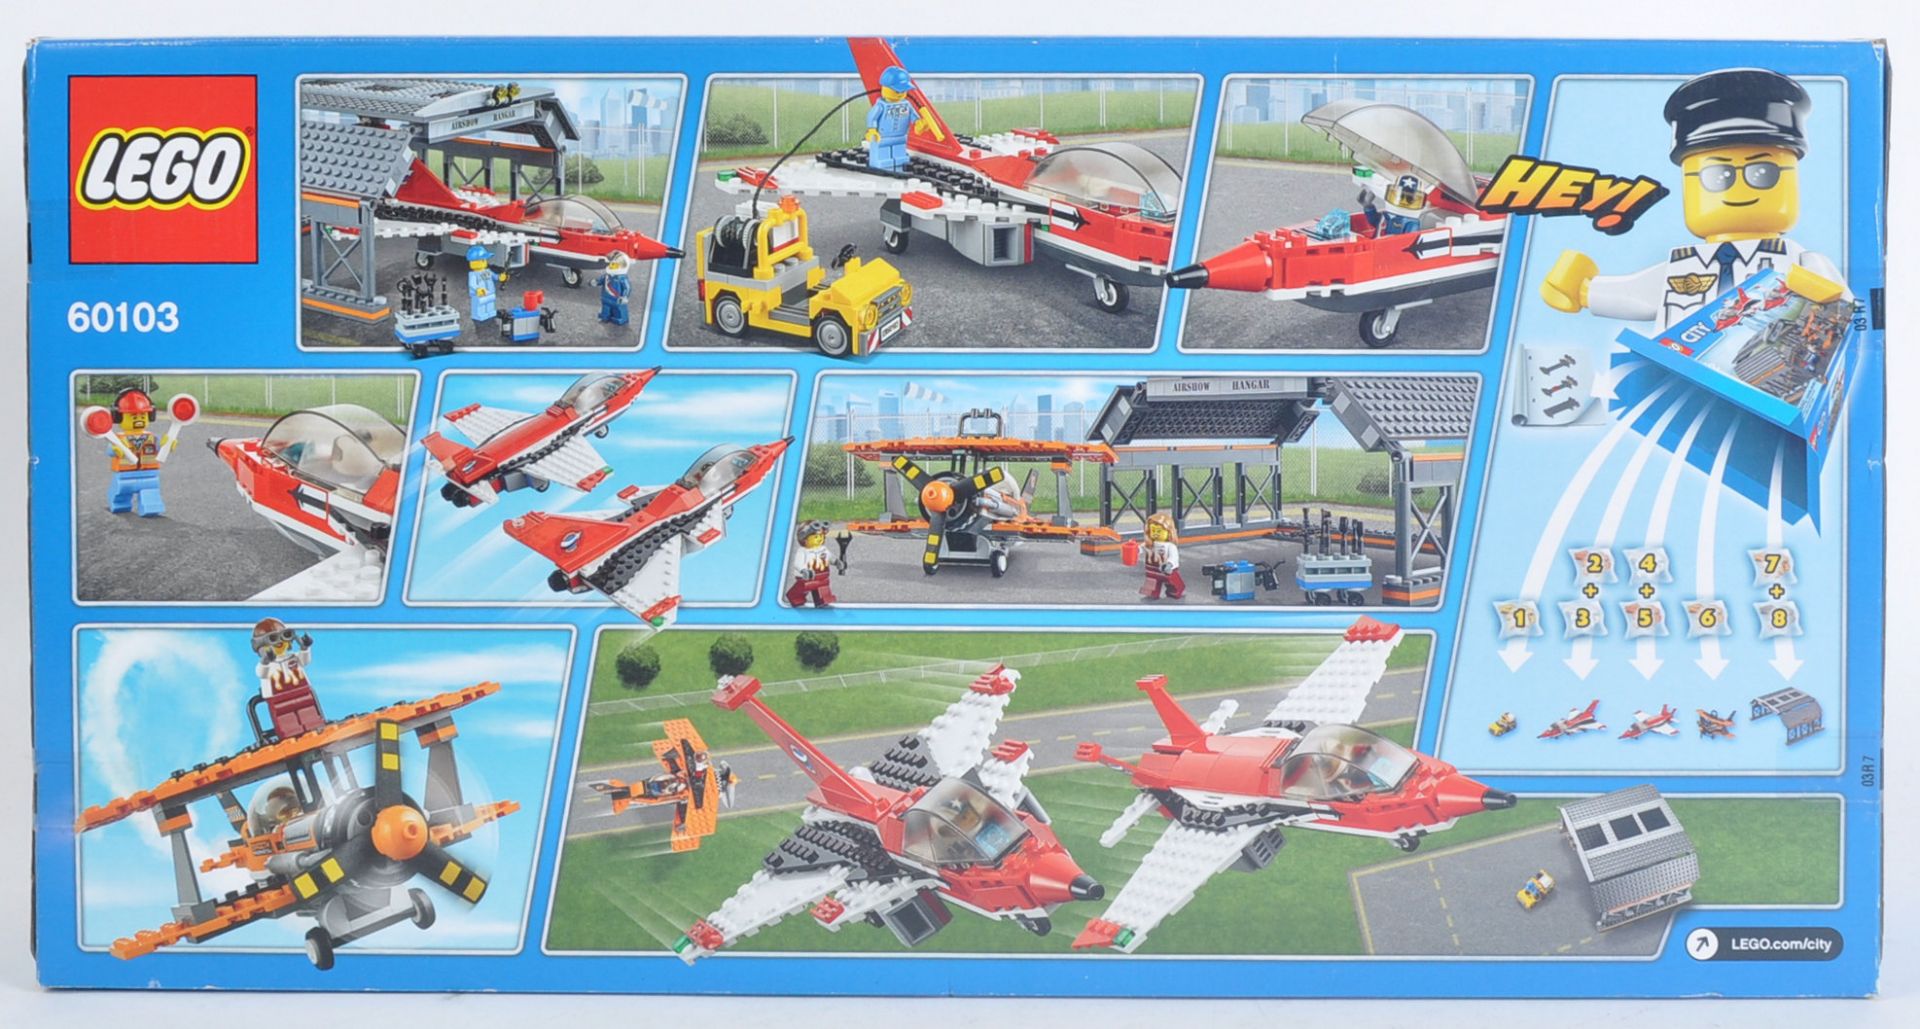 LEGO SET - LEGO CITY - 60103 - AIRPORT AIR SHOW - Image 2 of 4